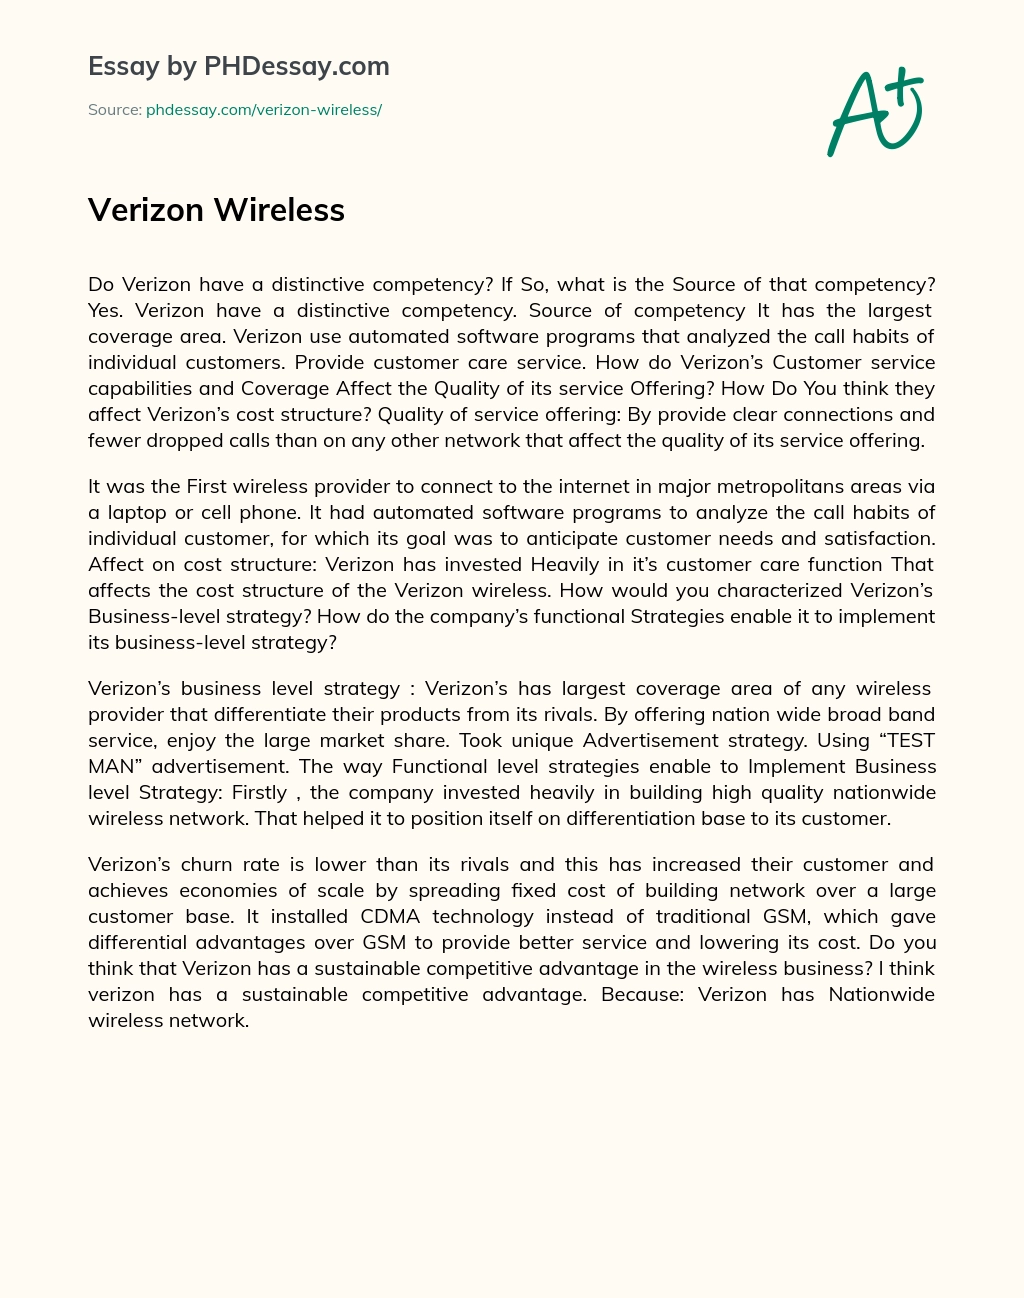 Verizon Wireless essay